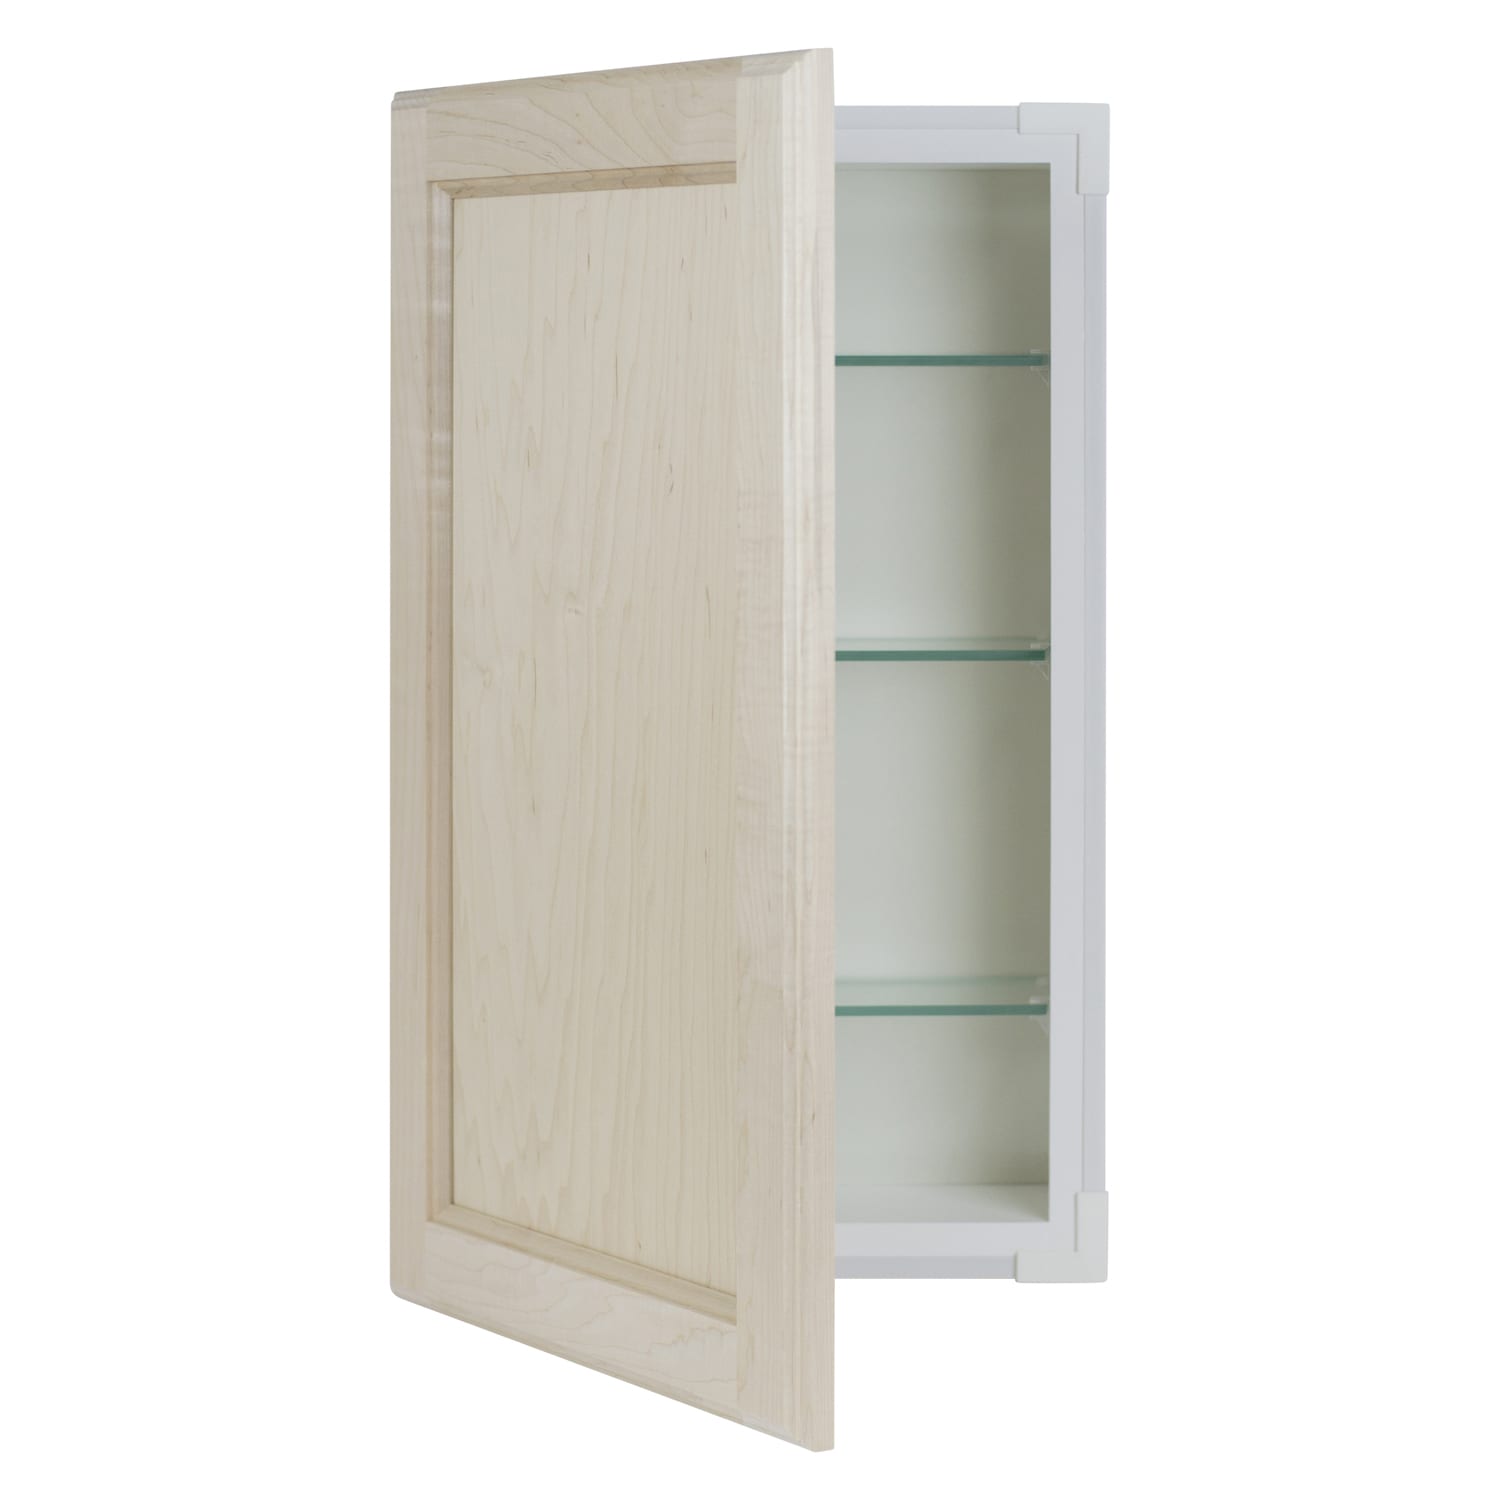 Custom Frameless Wooden Recessed Bathroom Medicine Cabinets